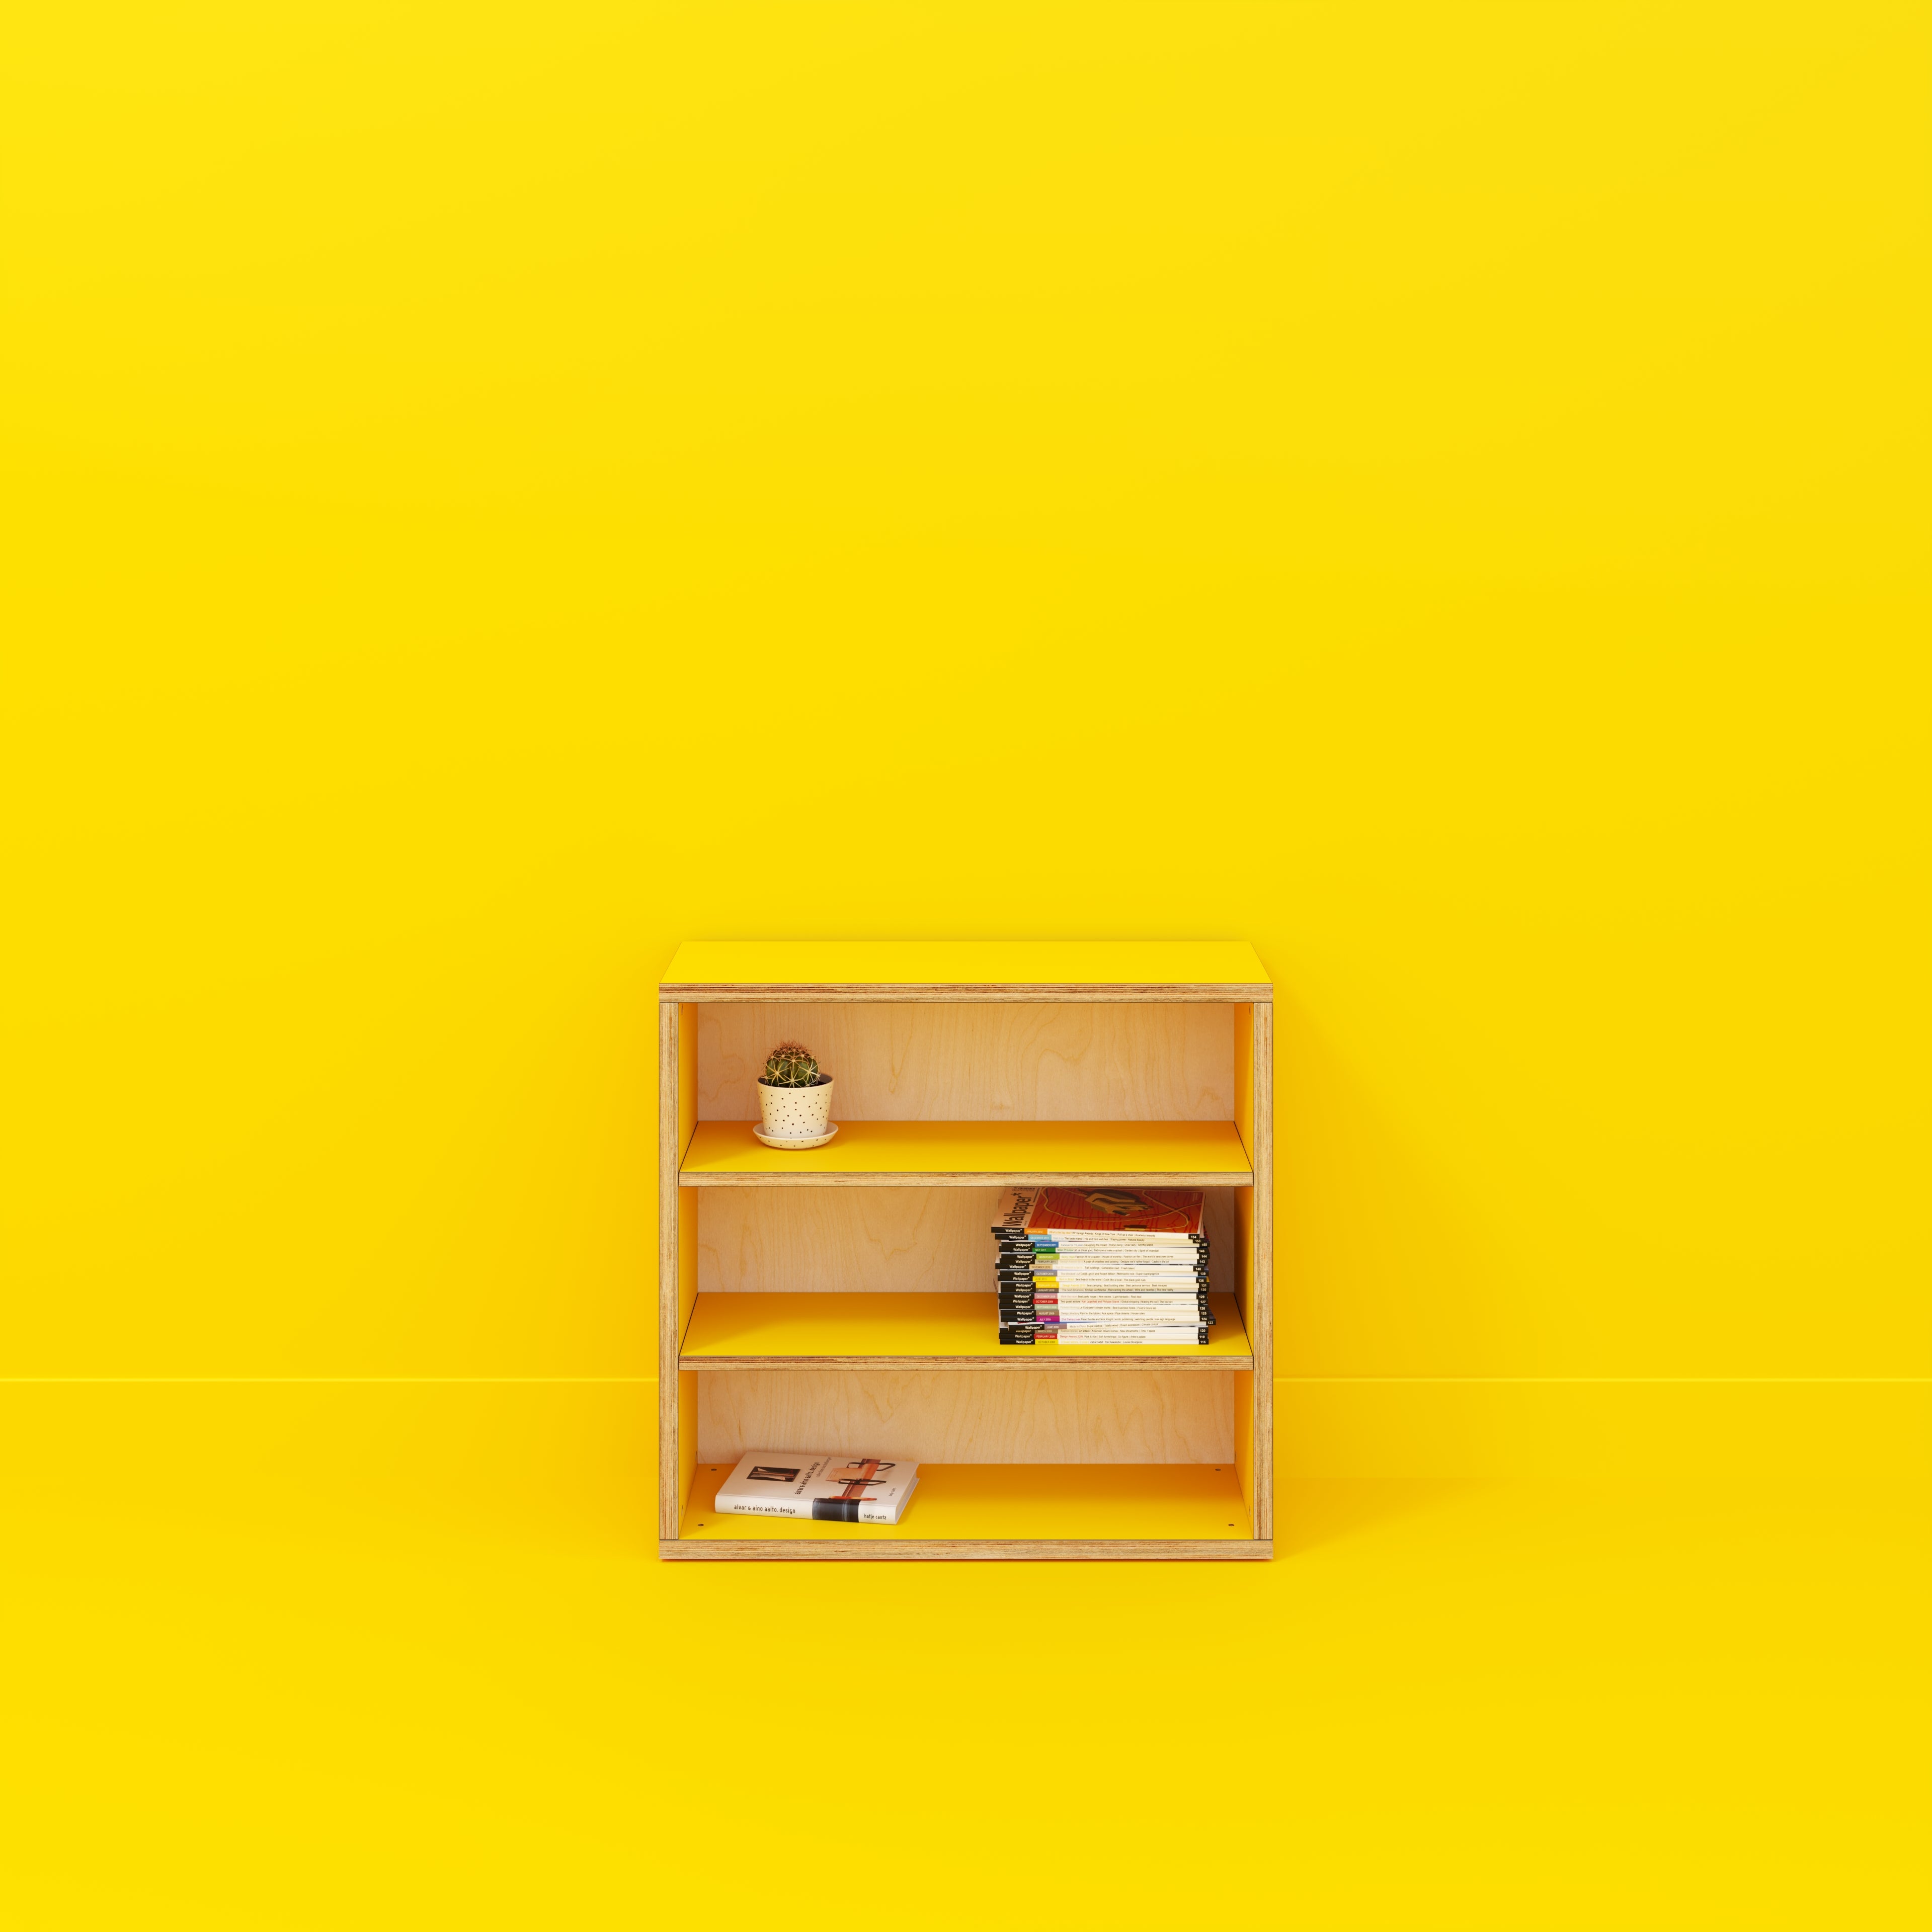 yellow plywood bookshelf